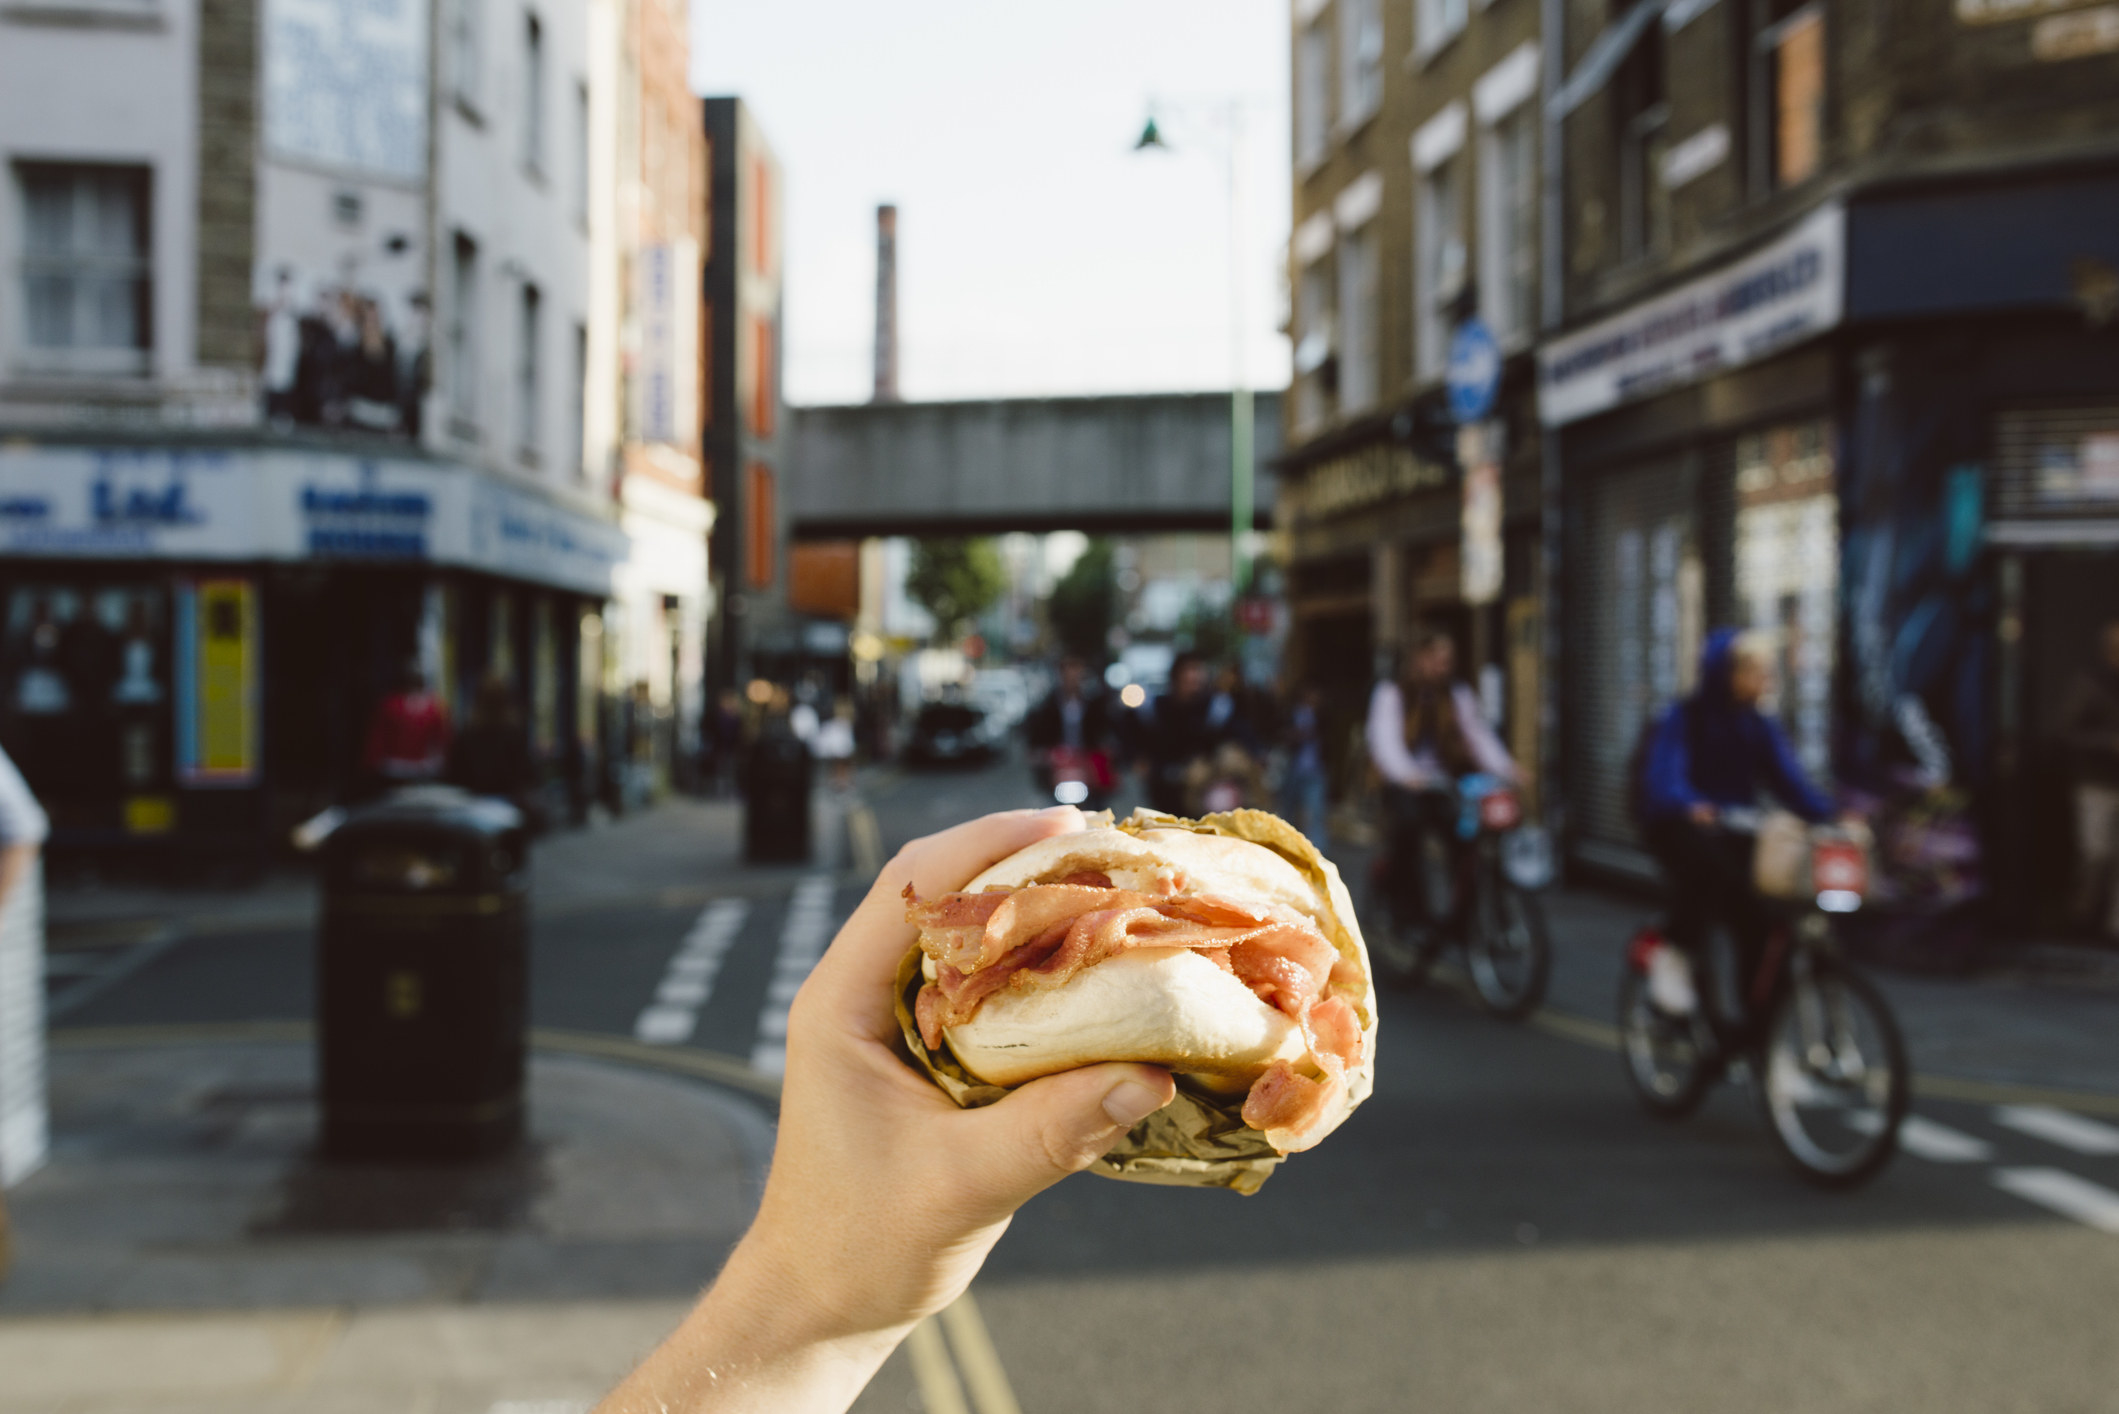 Someone holding street food in a London neighborhood.